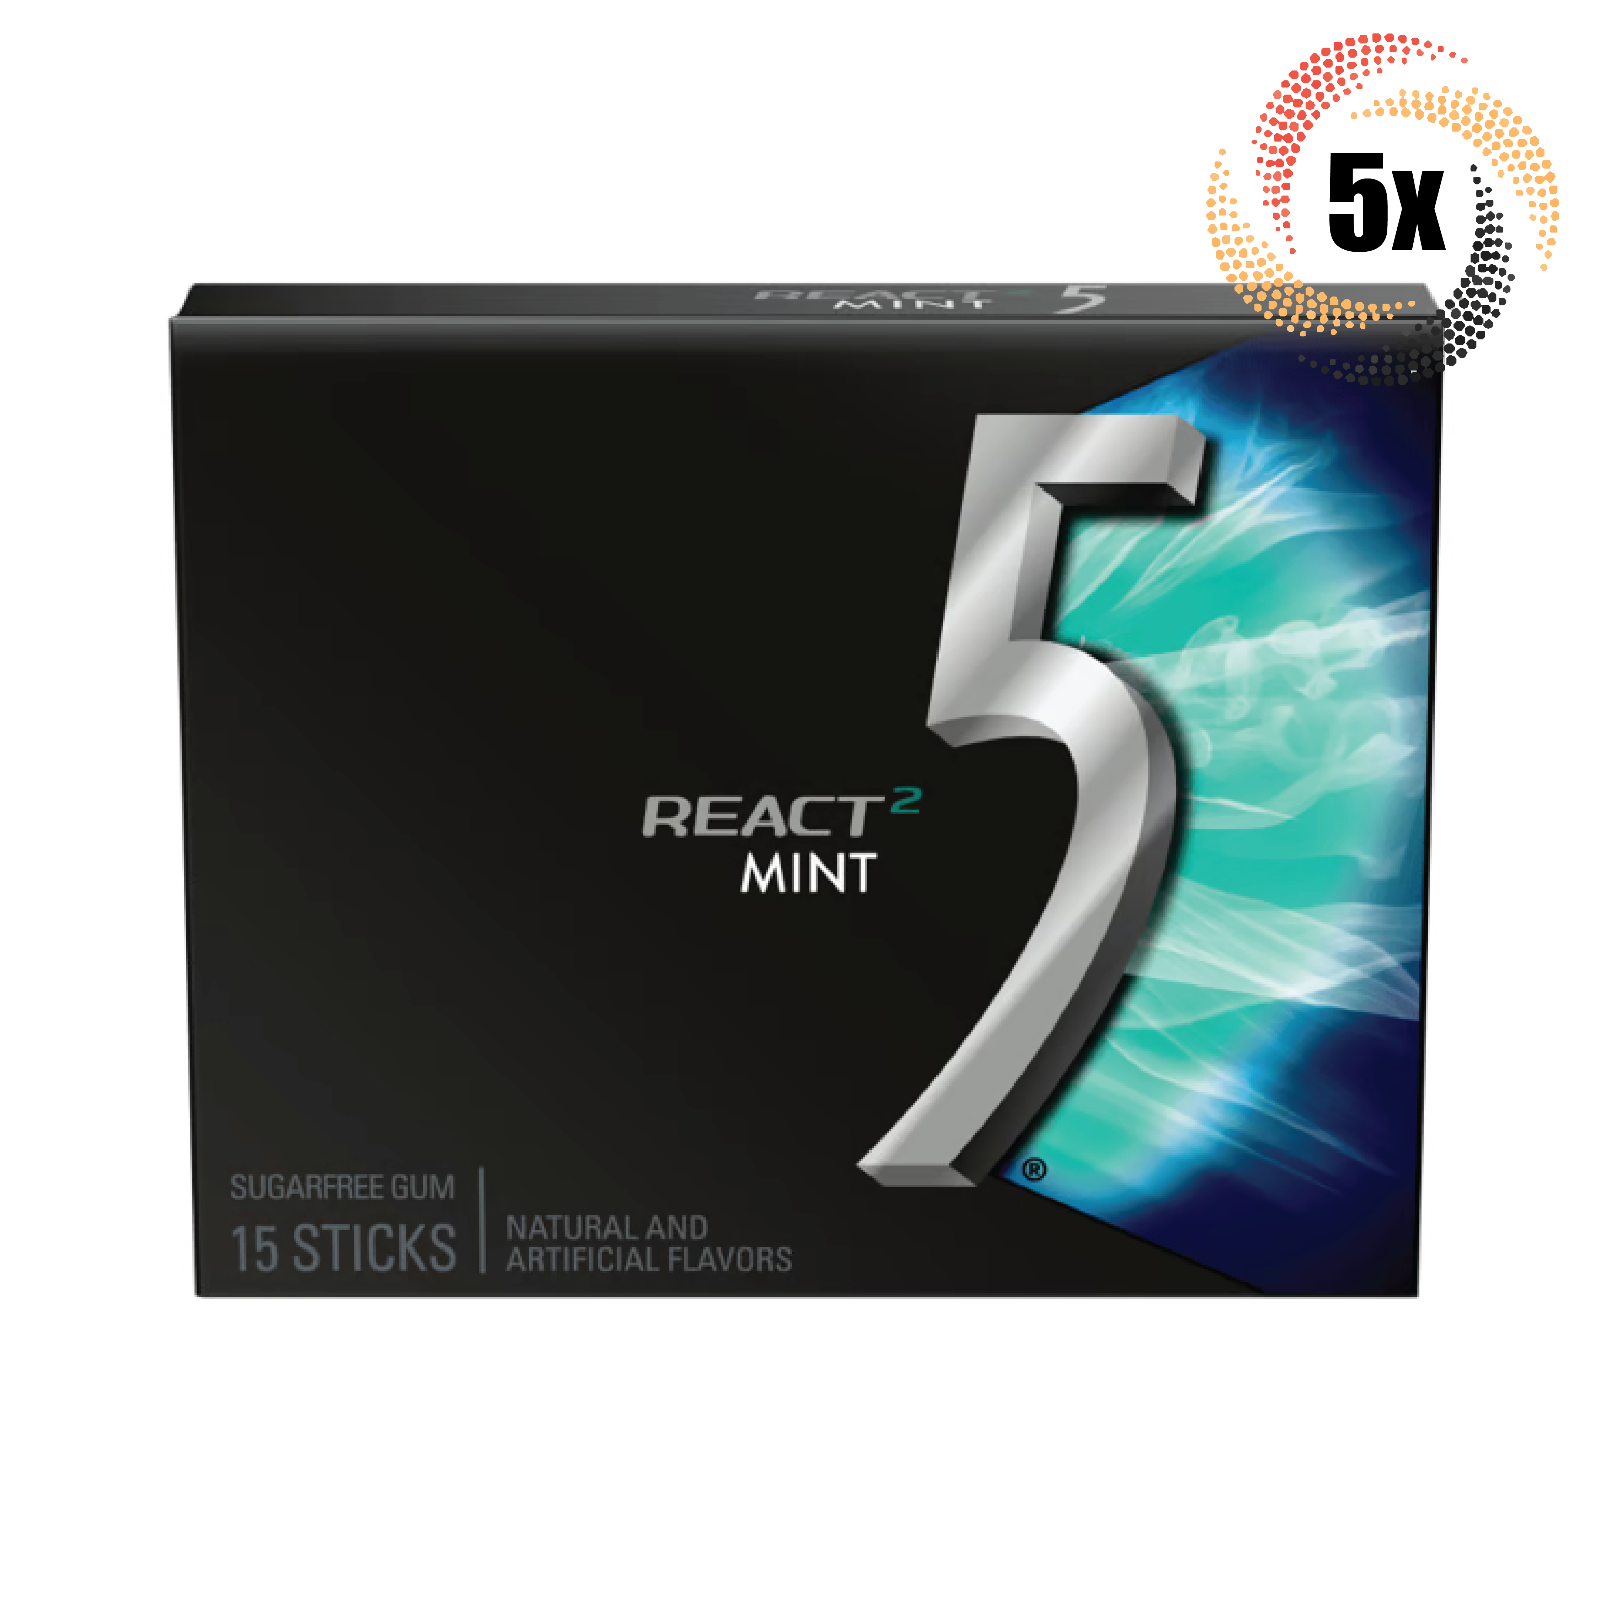 5x Packs 5 Gum React 2 Mint Flavor | 15 Sticks Per Pack | Fast Shipping - $16.10